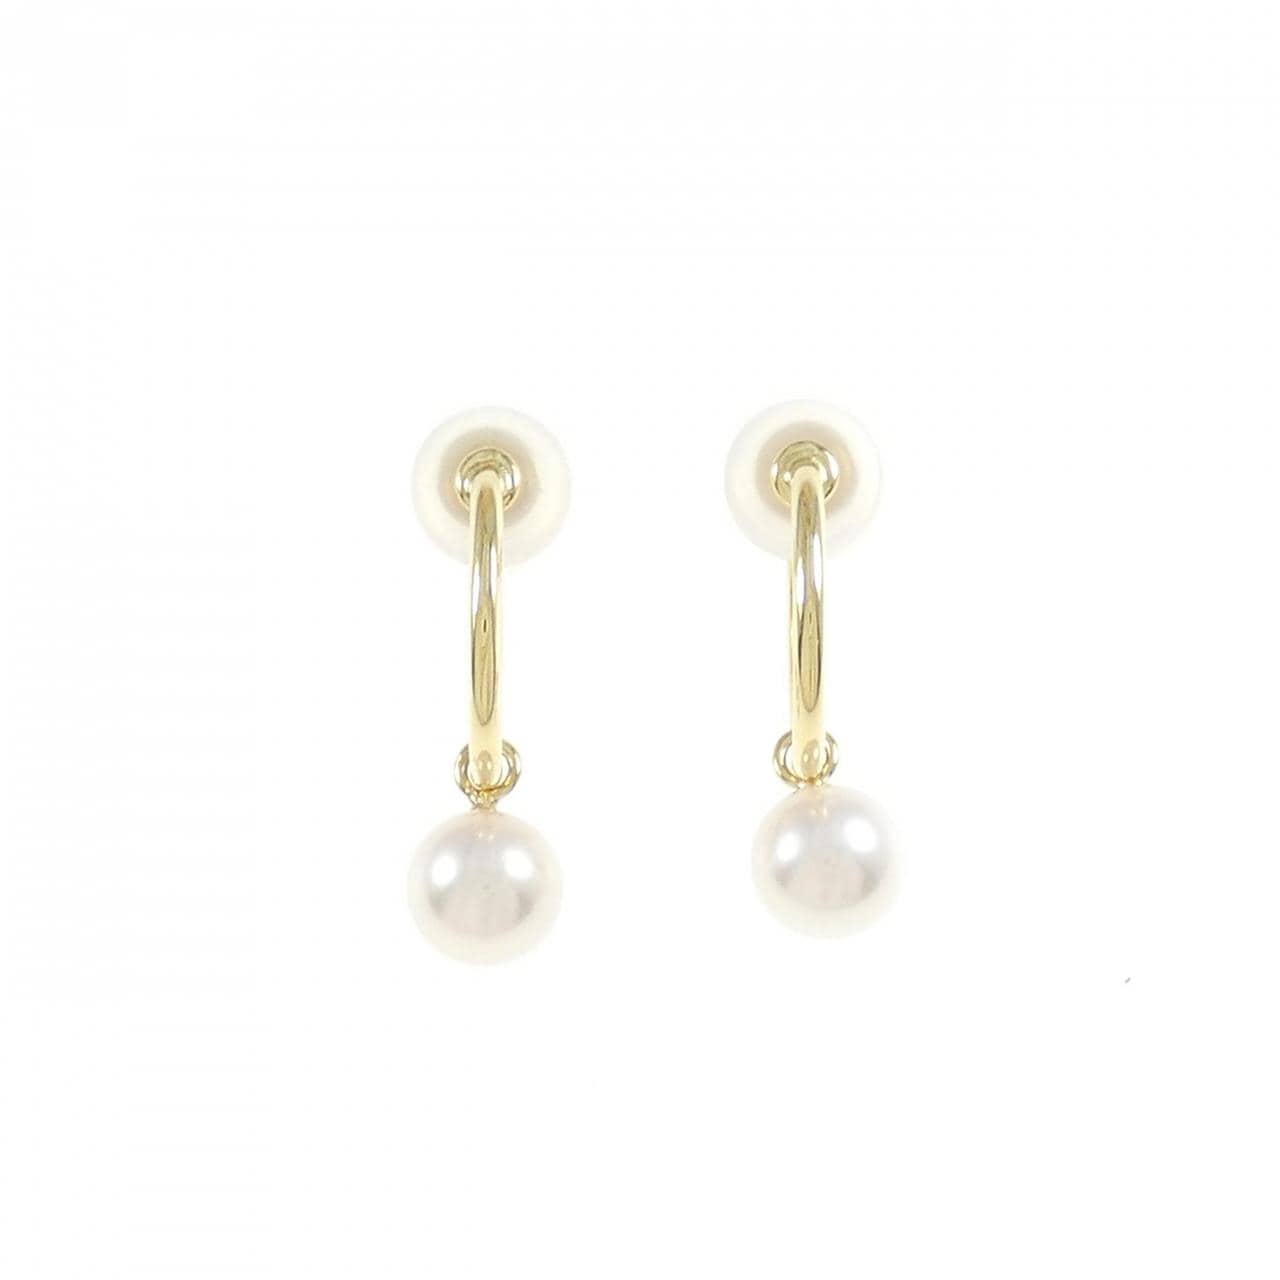 MIKIMOTO Akoya pearl earrings 7.1mm